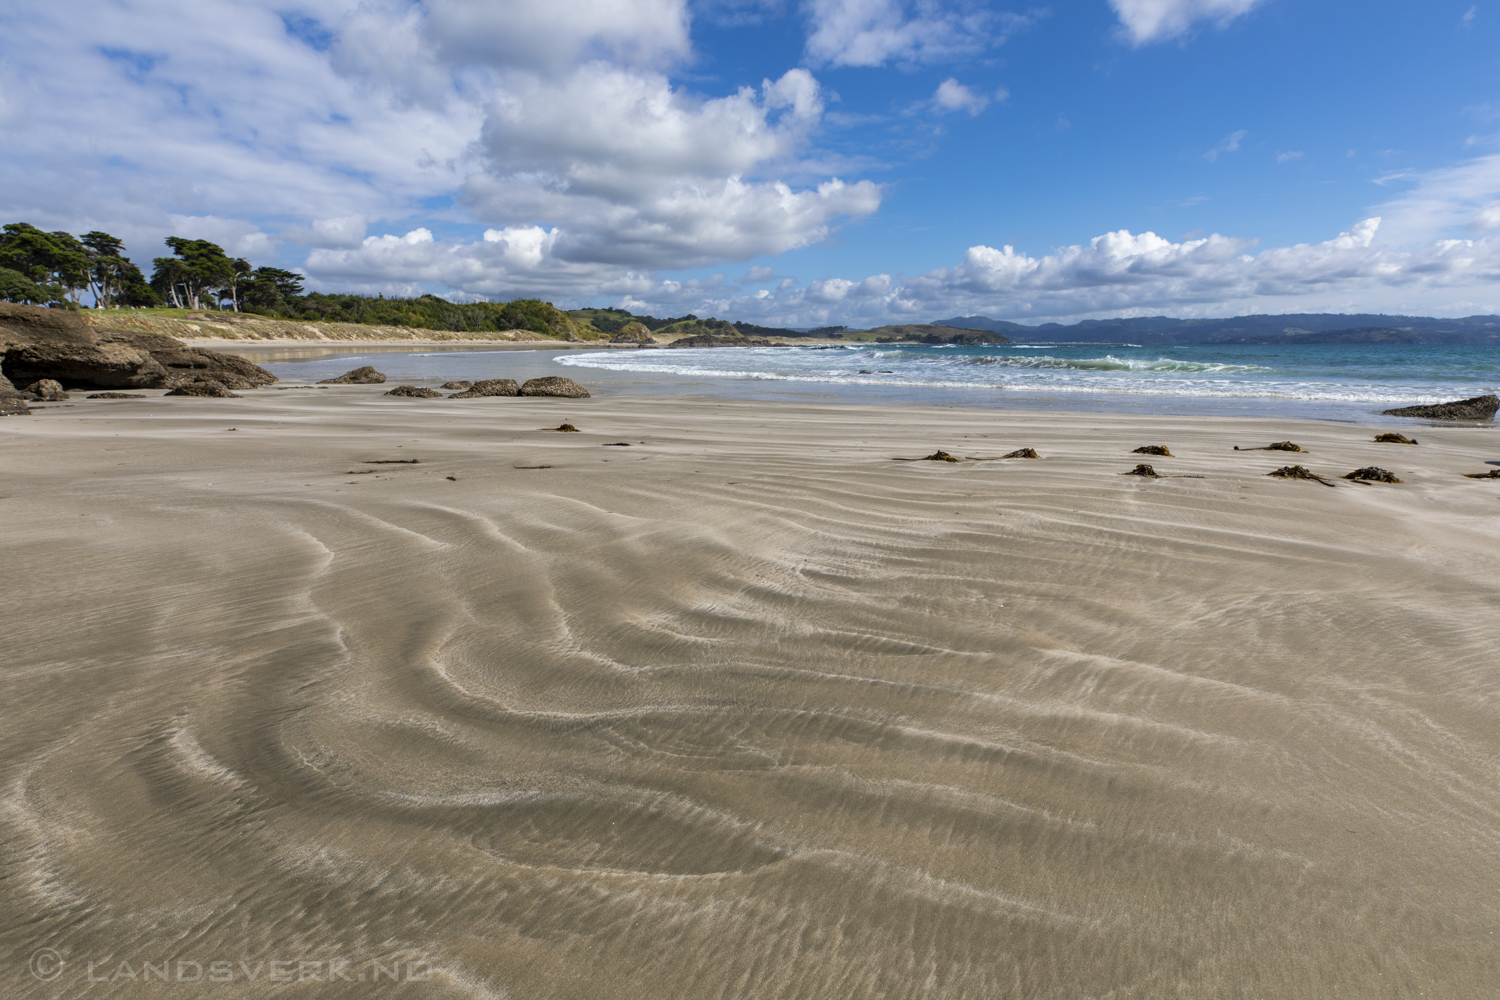 Anchor Bay, Tawharanui Regional Park, New Zealand.

(Canon EOS 5D Mark IV / Canon EF 16-35mm f/2.8 L III USM)